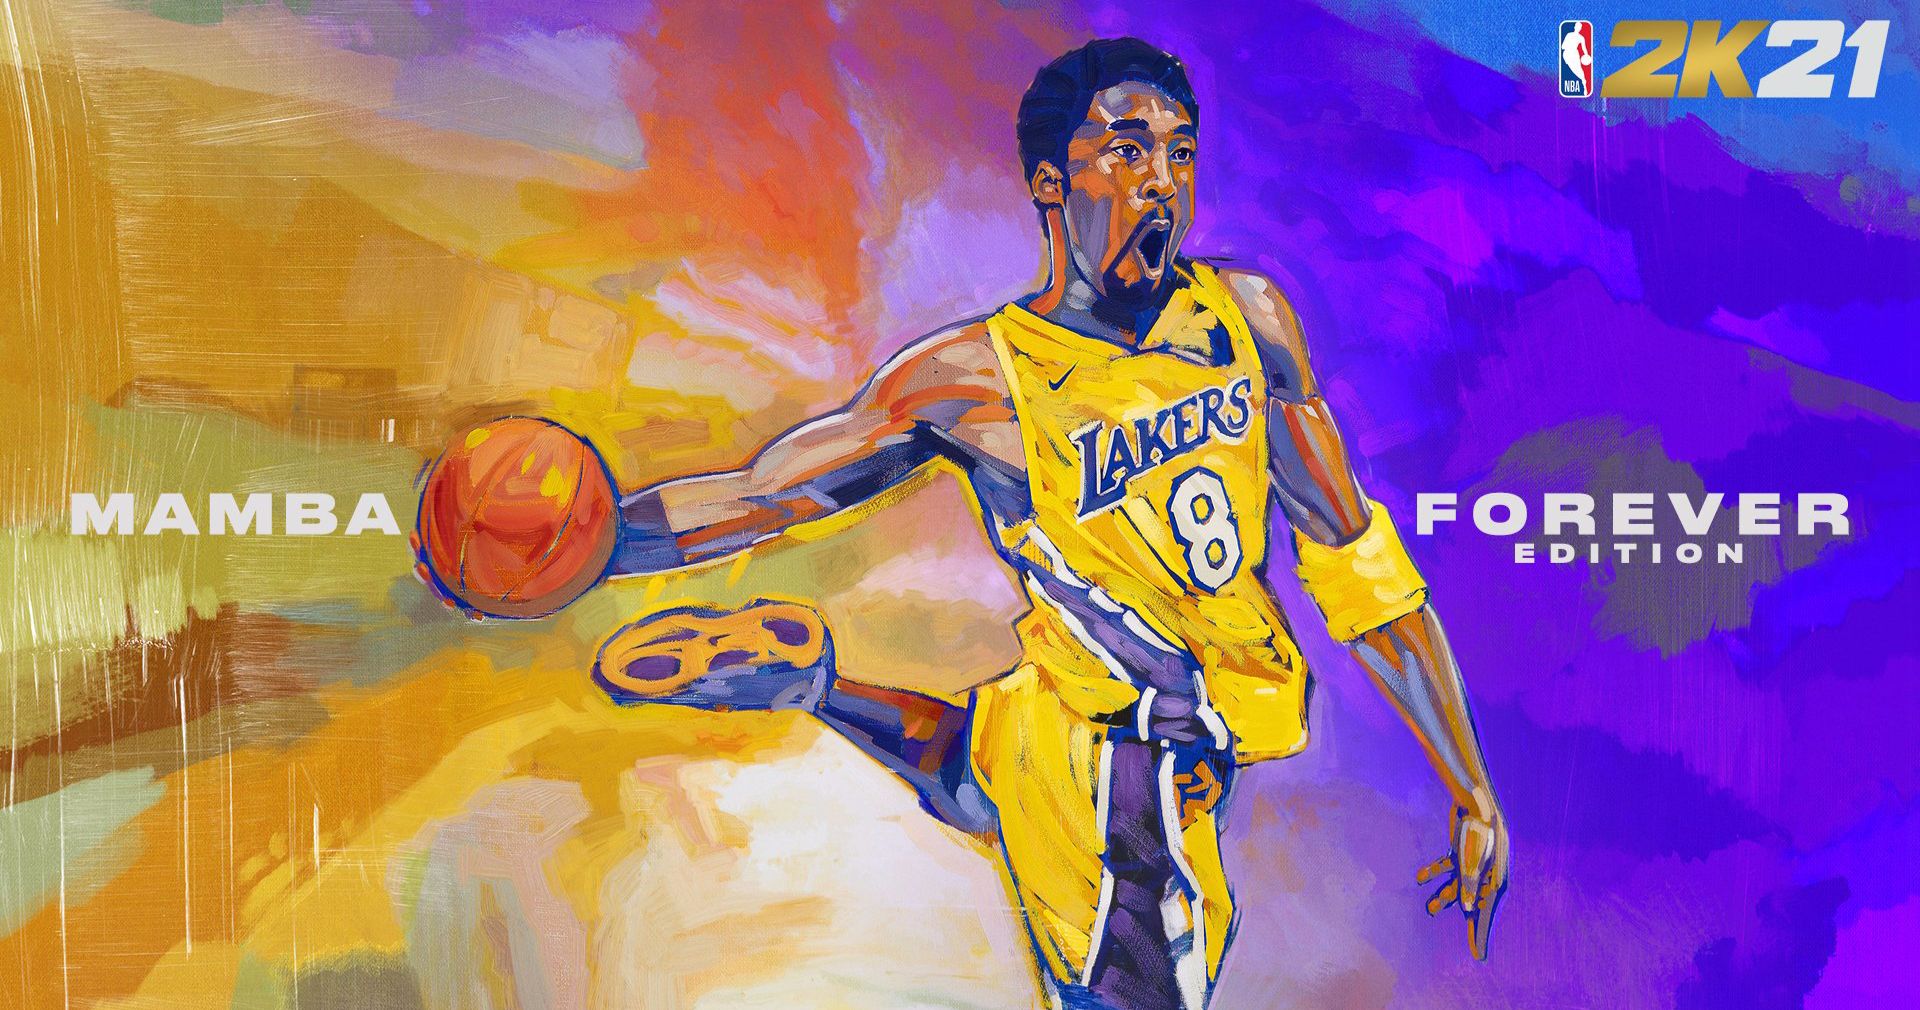 NBA 2K21 Celebrates Kobe Bryant Legacy with 2 Mamba Forever Edition Covers